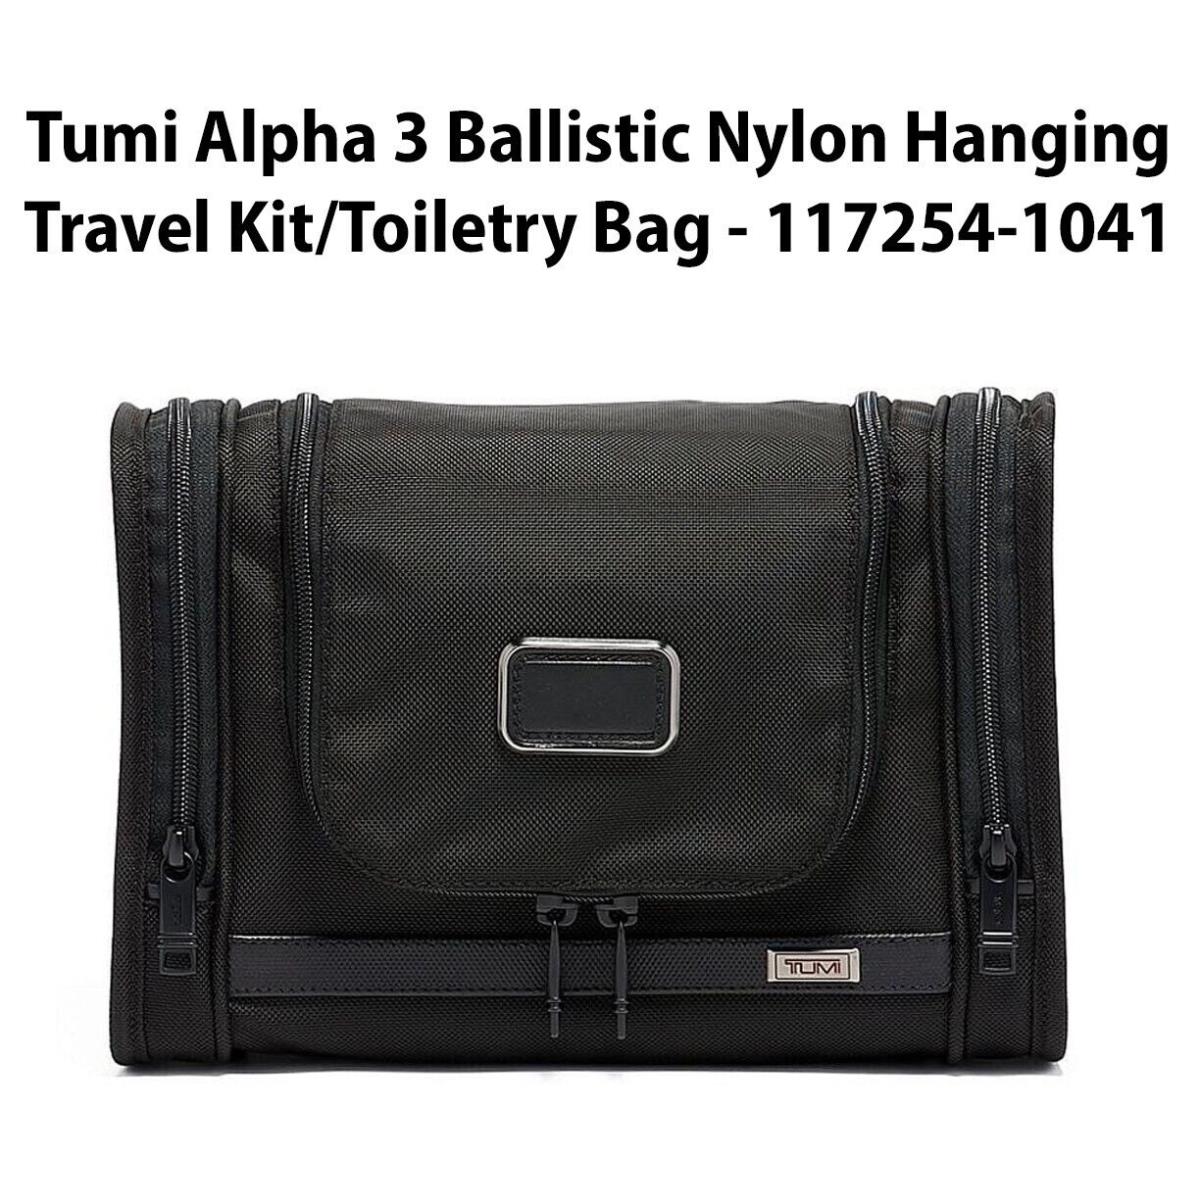 Tumi Alpha 3 Ballistic Nylon Hanging Travel Kit/toiletry Bag 117254-1041 -black